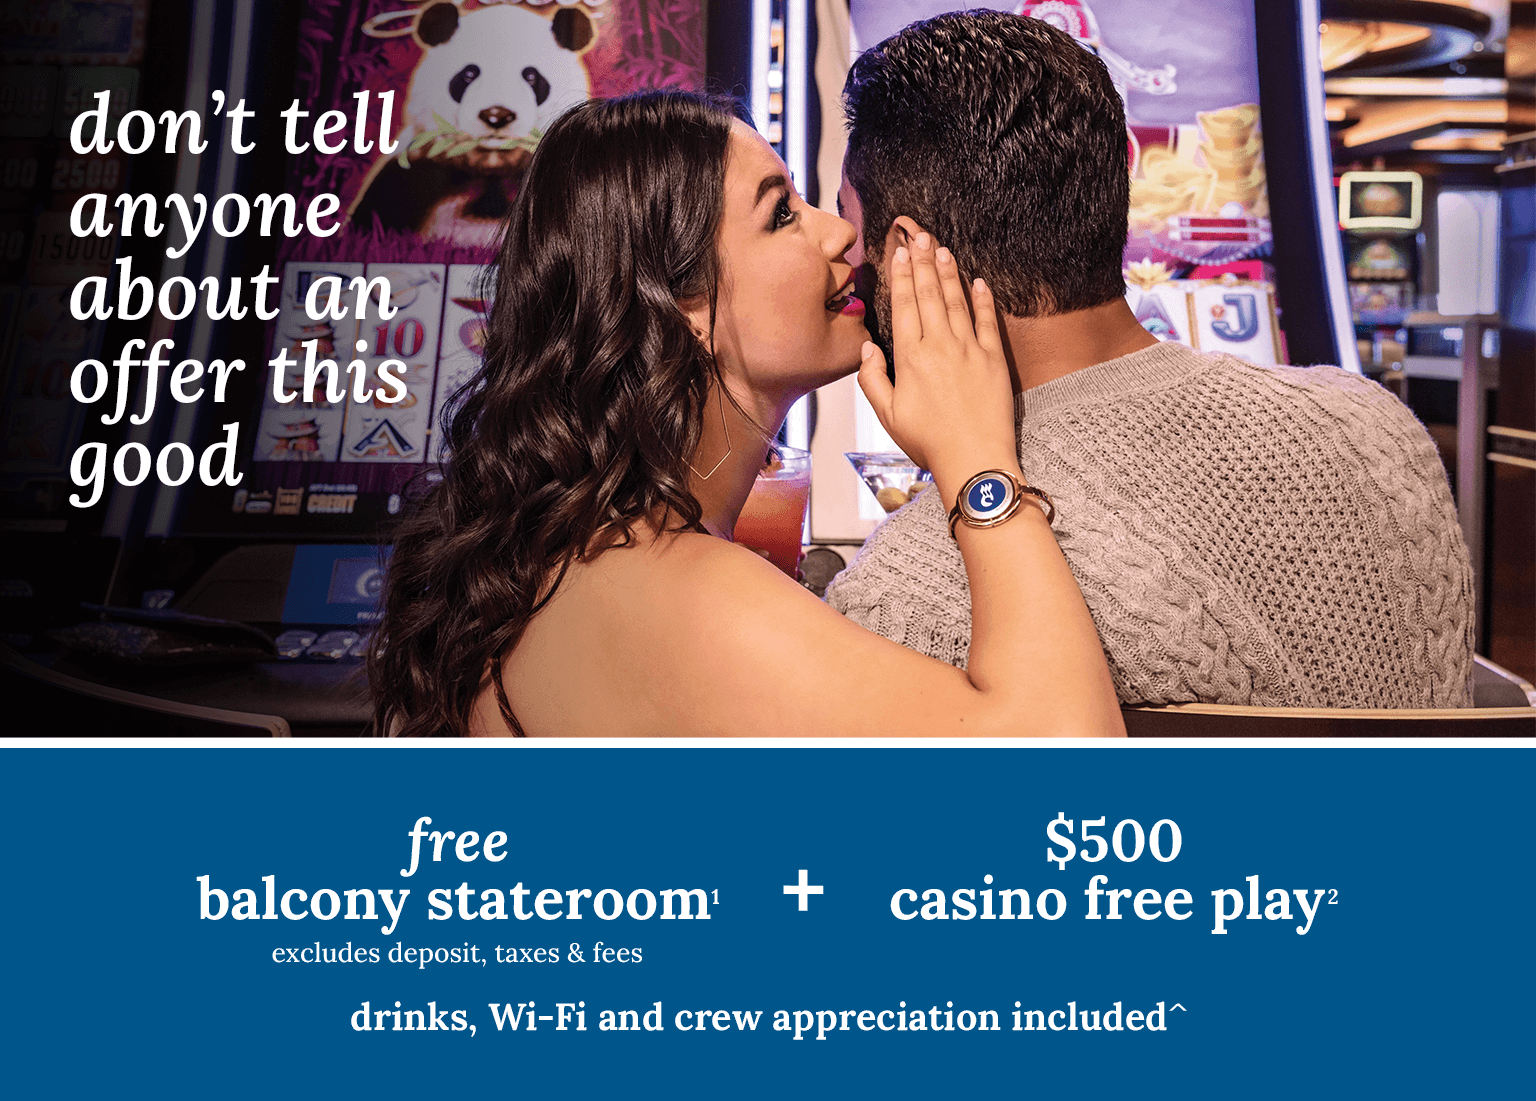 free balcony stateroom + $500 casino free play + drinks, Wi-Fi & crew appreciation. Click here to book.